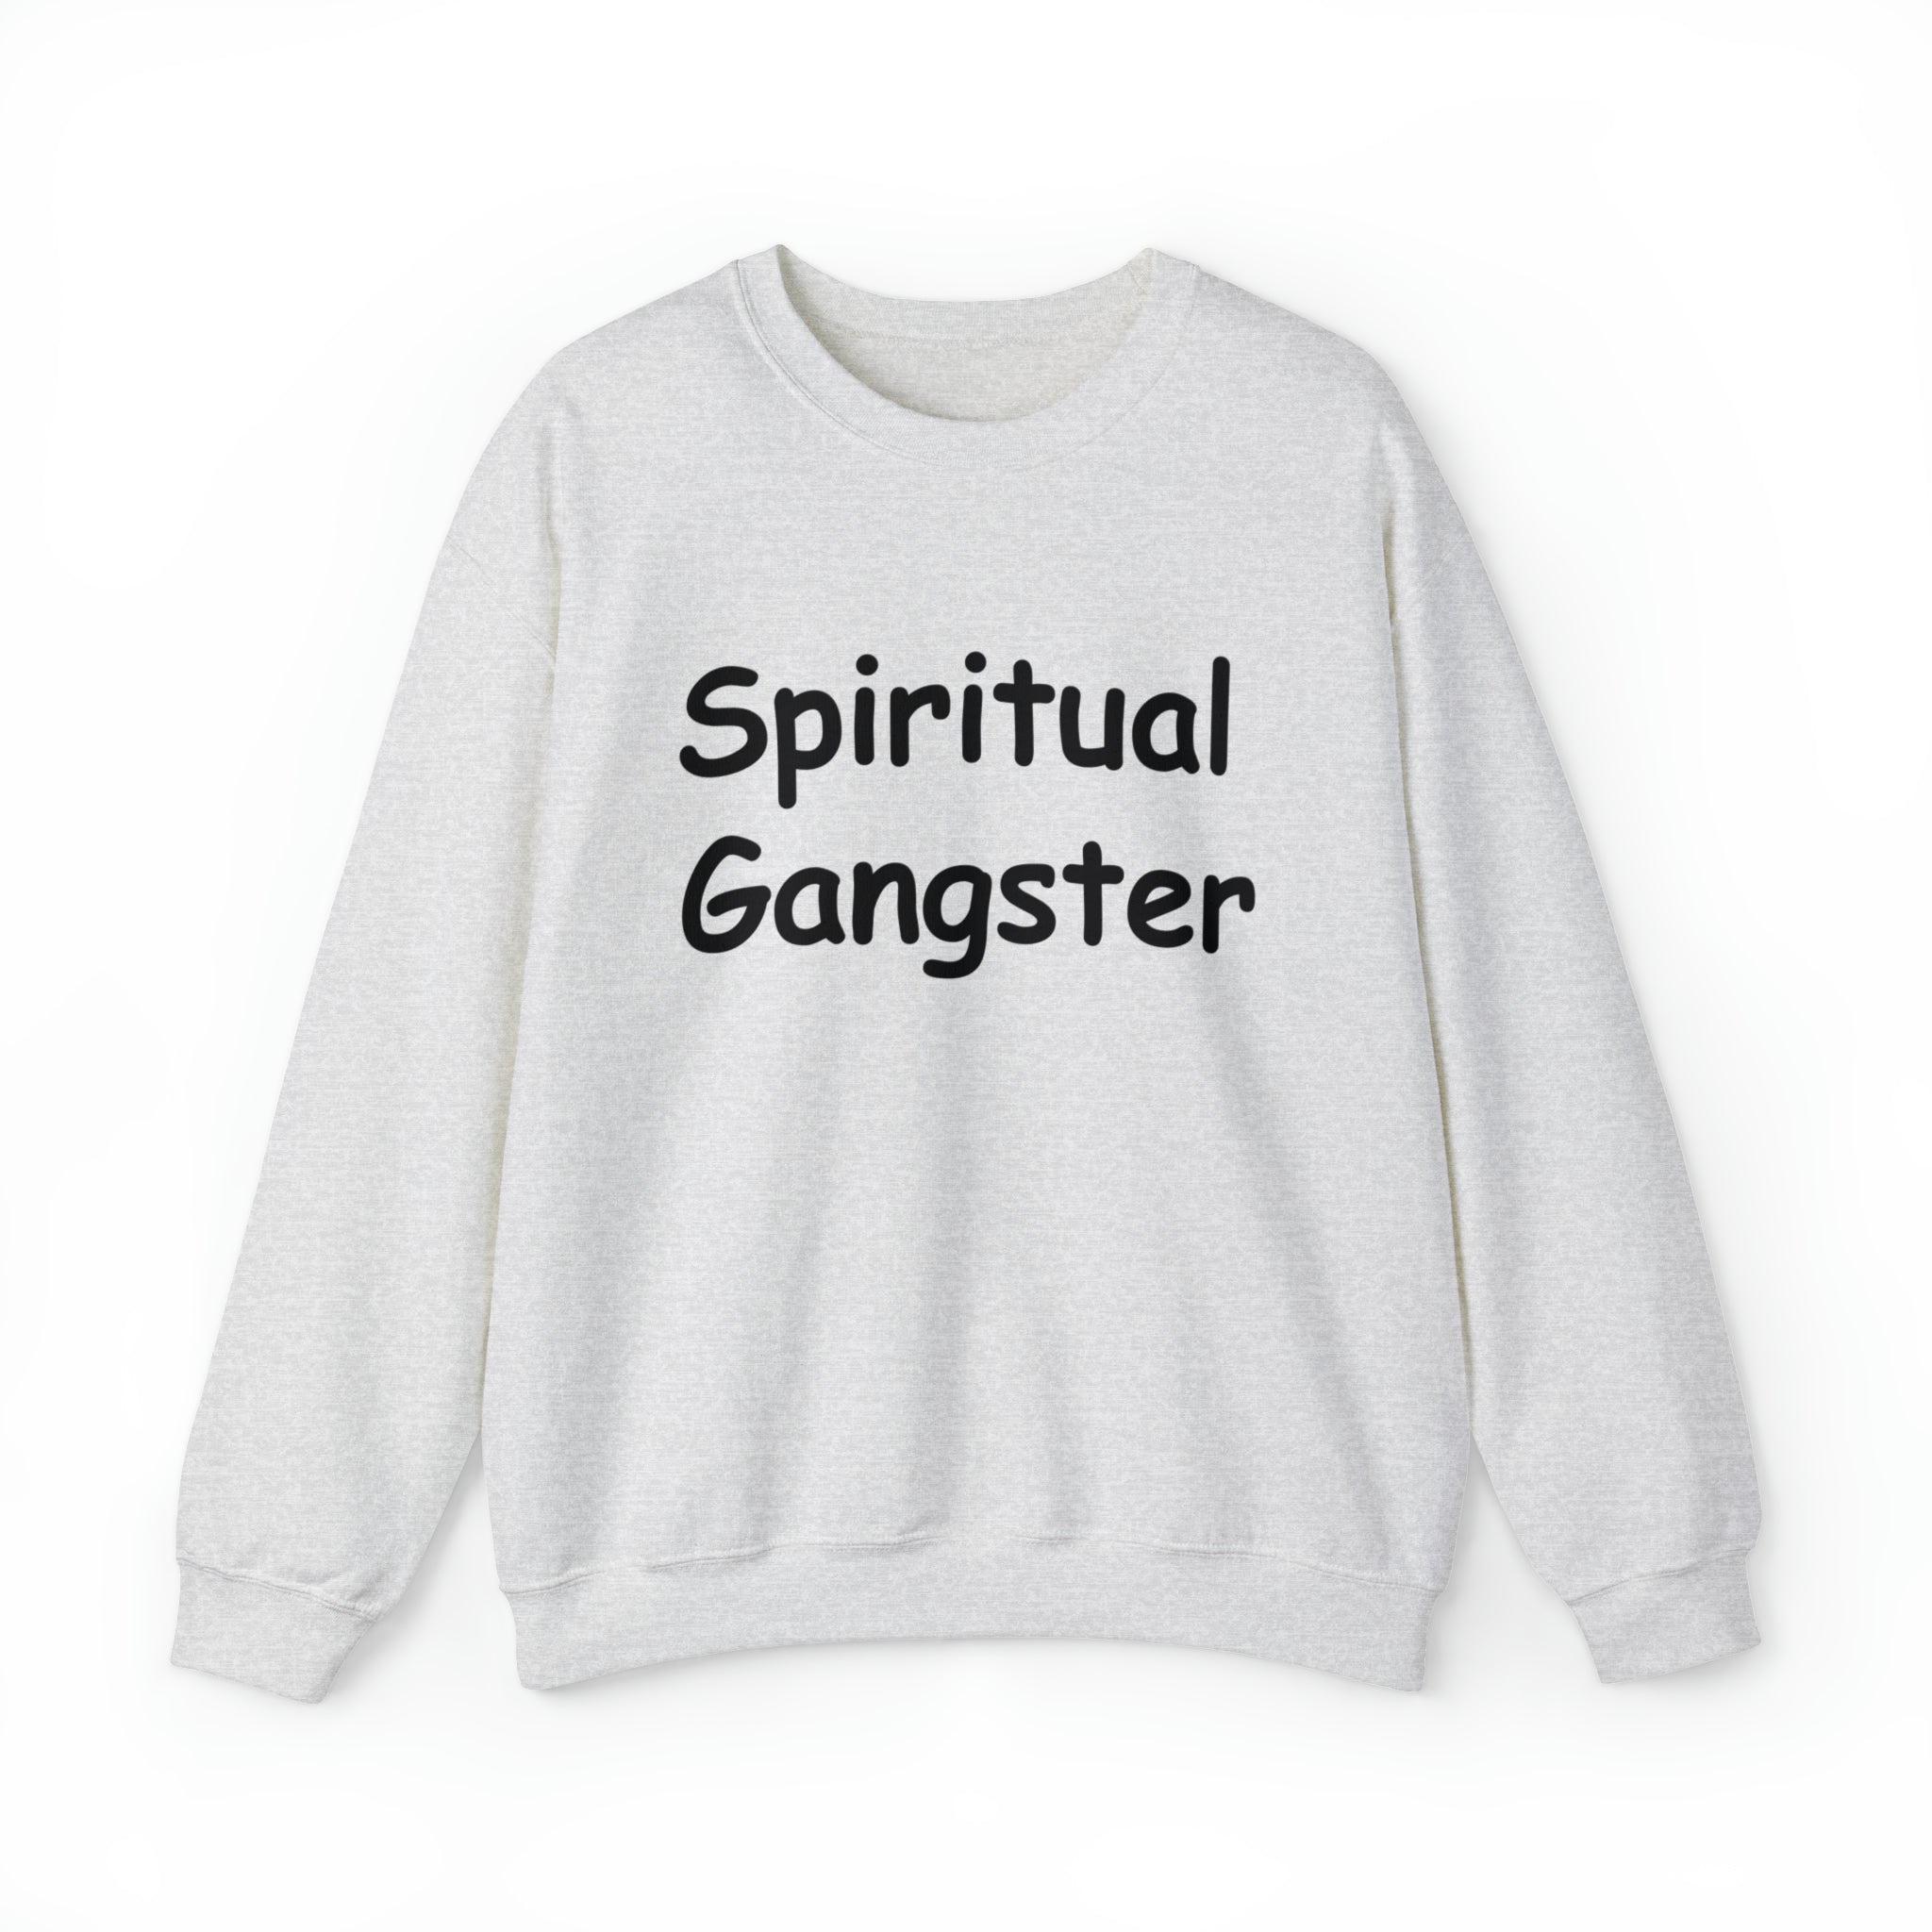 SPIRITUAL GANGSTER SWEATER